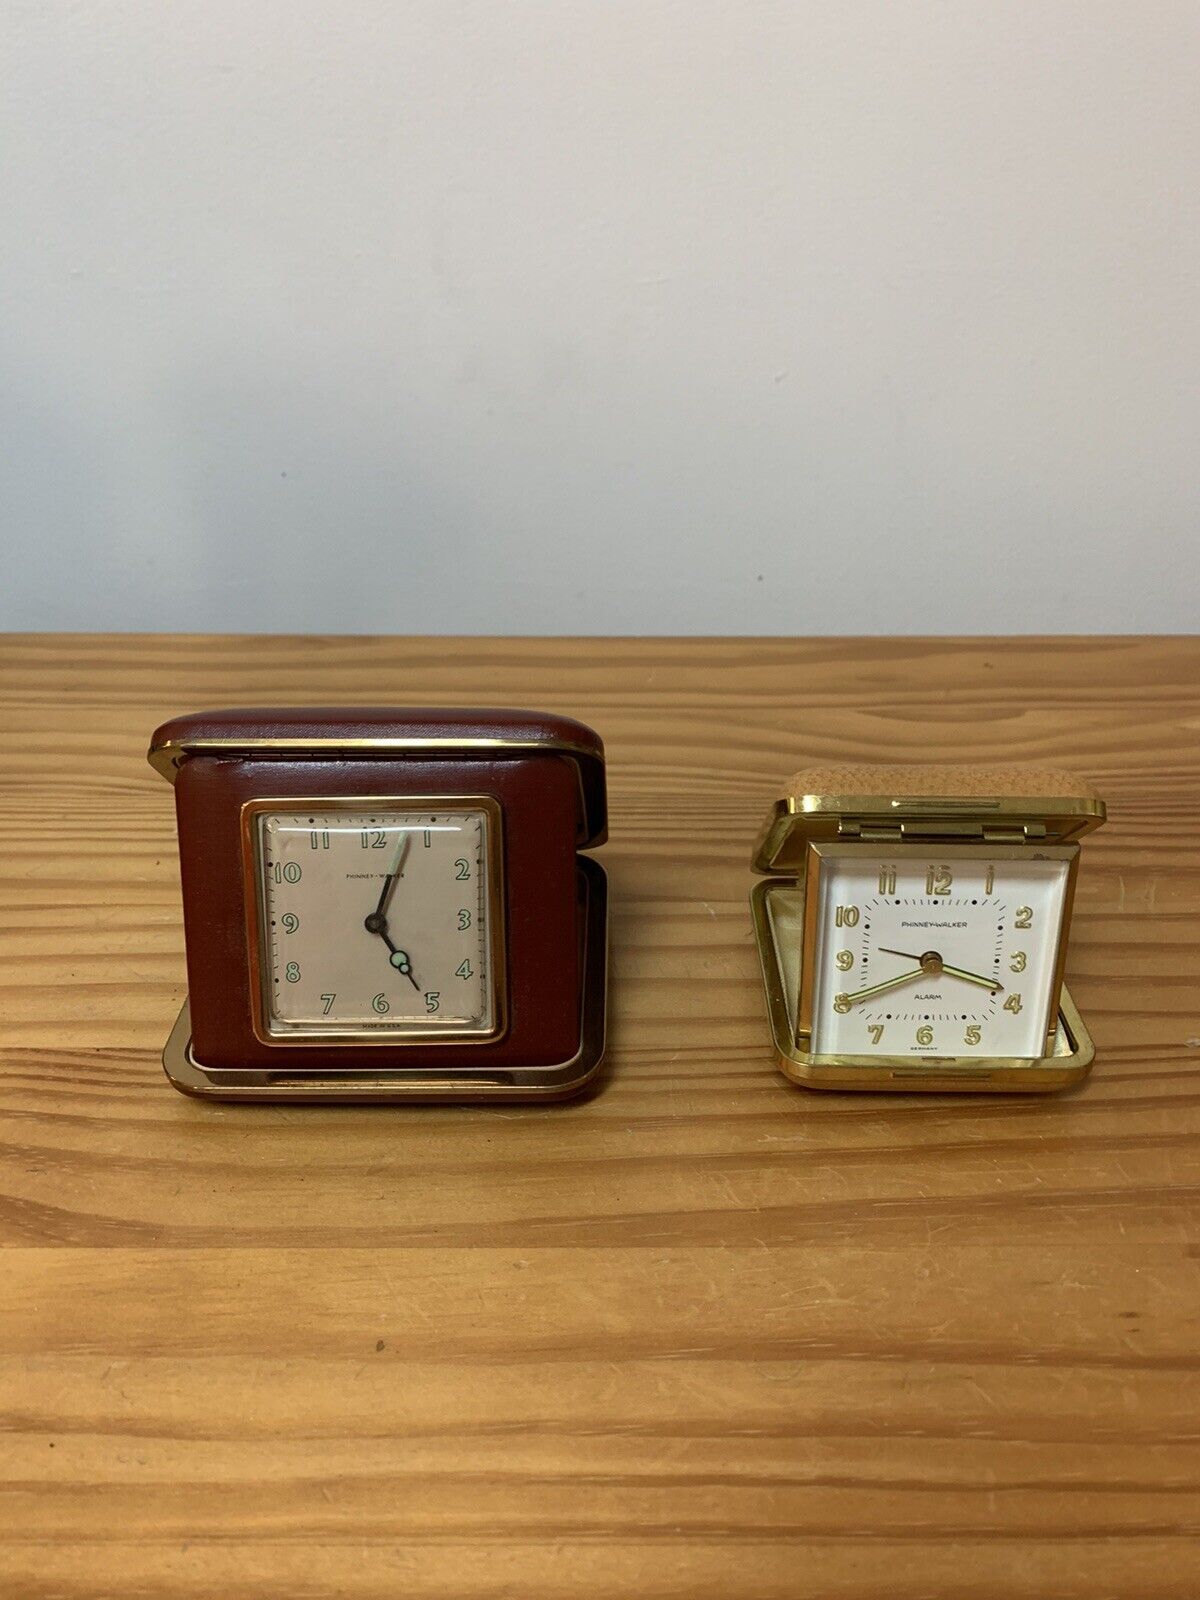 Lot of 2 Phinney-Walker Vintage Travel Alarm Clock Red & Tan - Parts/Repair